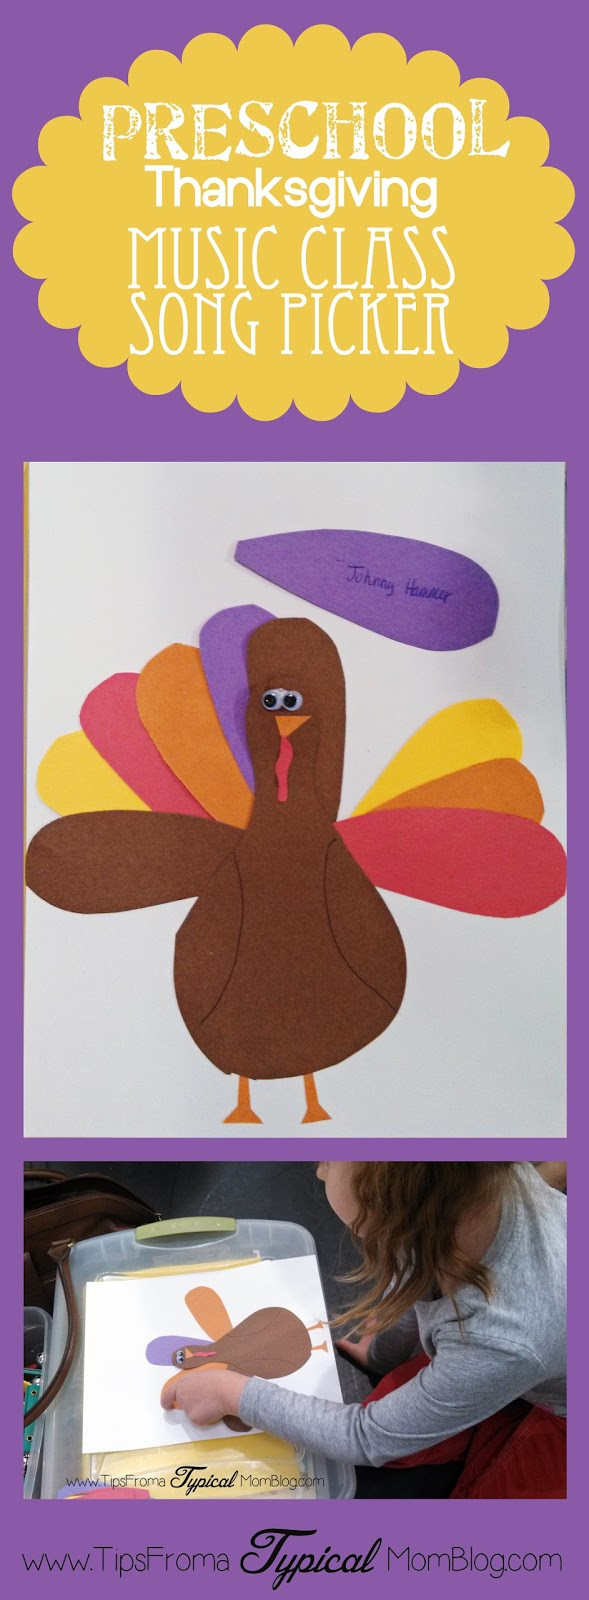 Thanksgiving Turkey Song
 Preschool Thanksgiving Songs and Turkey Song Picker Tips